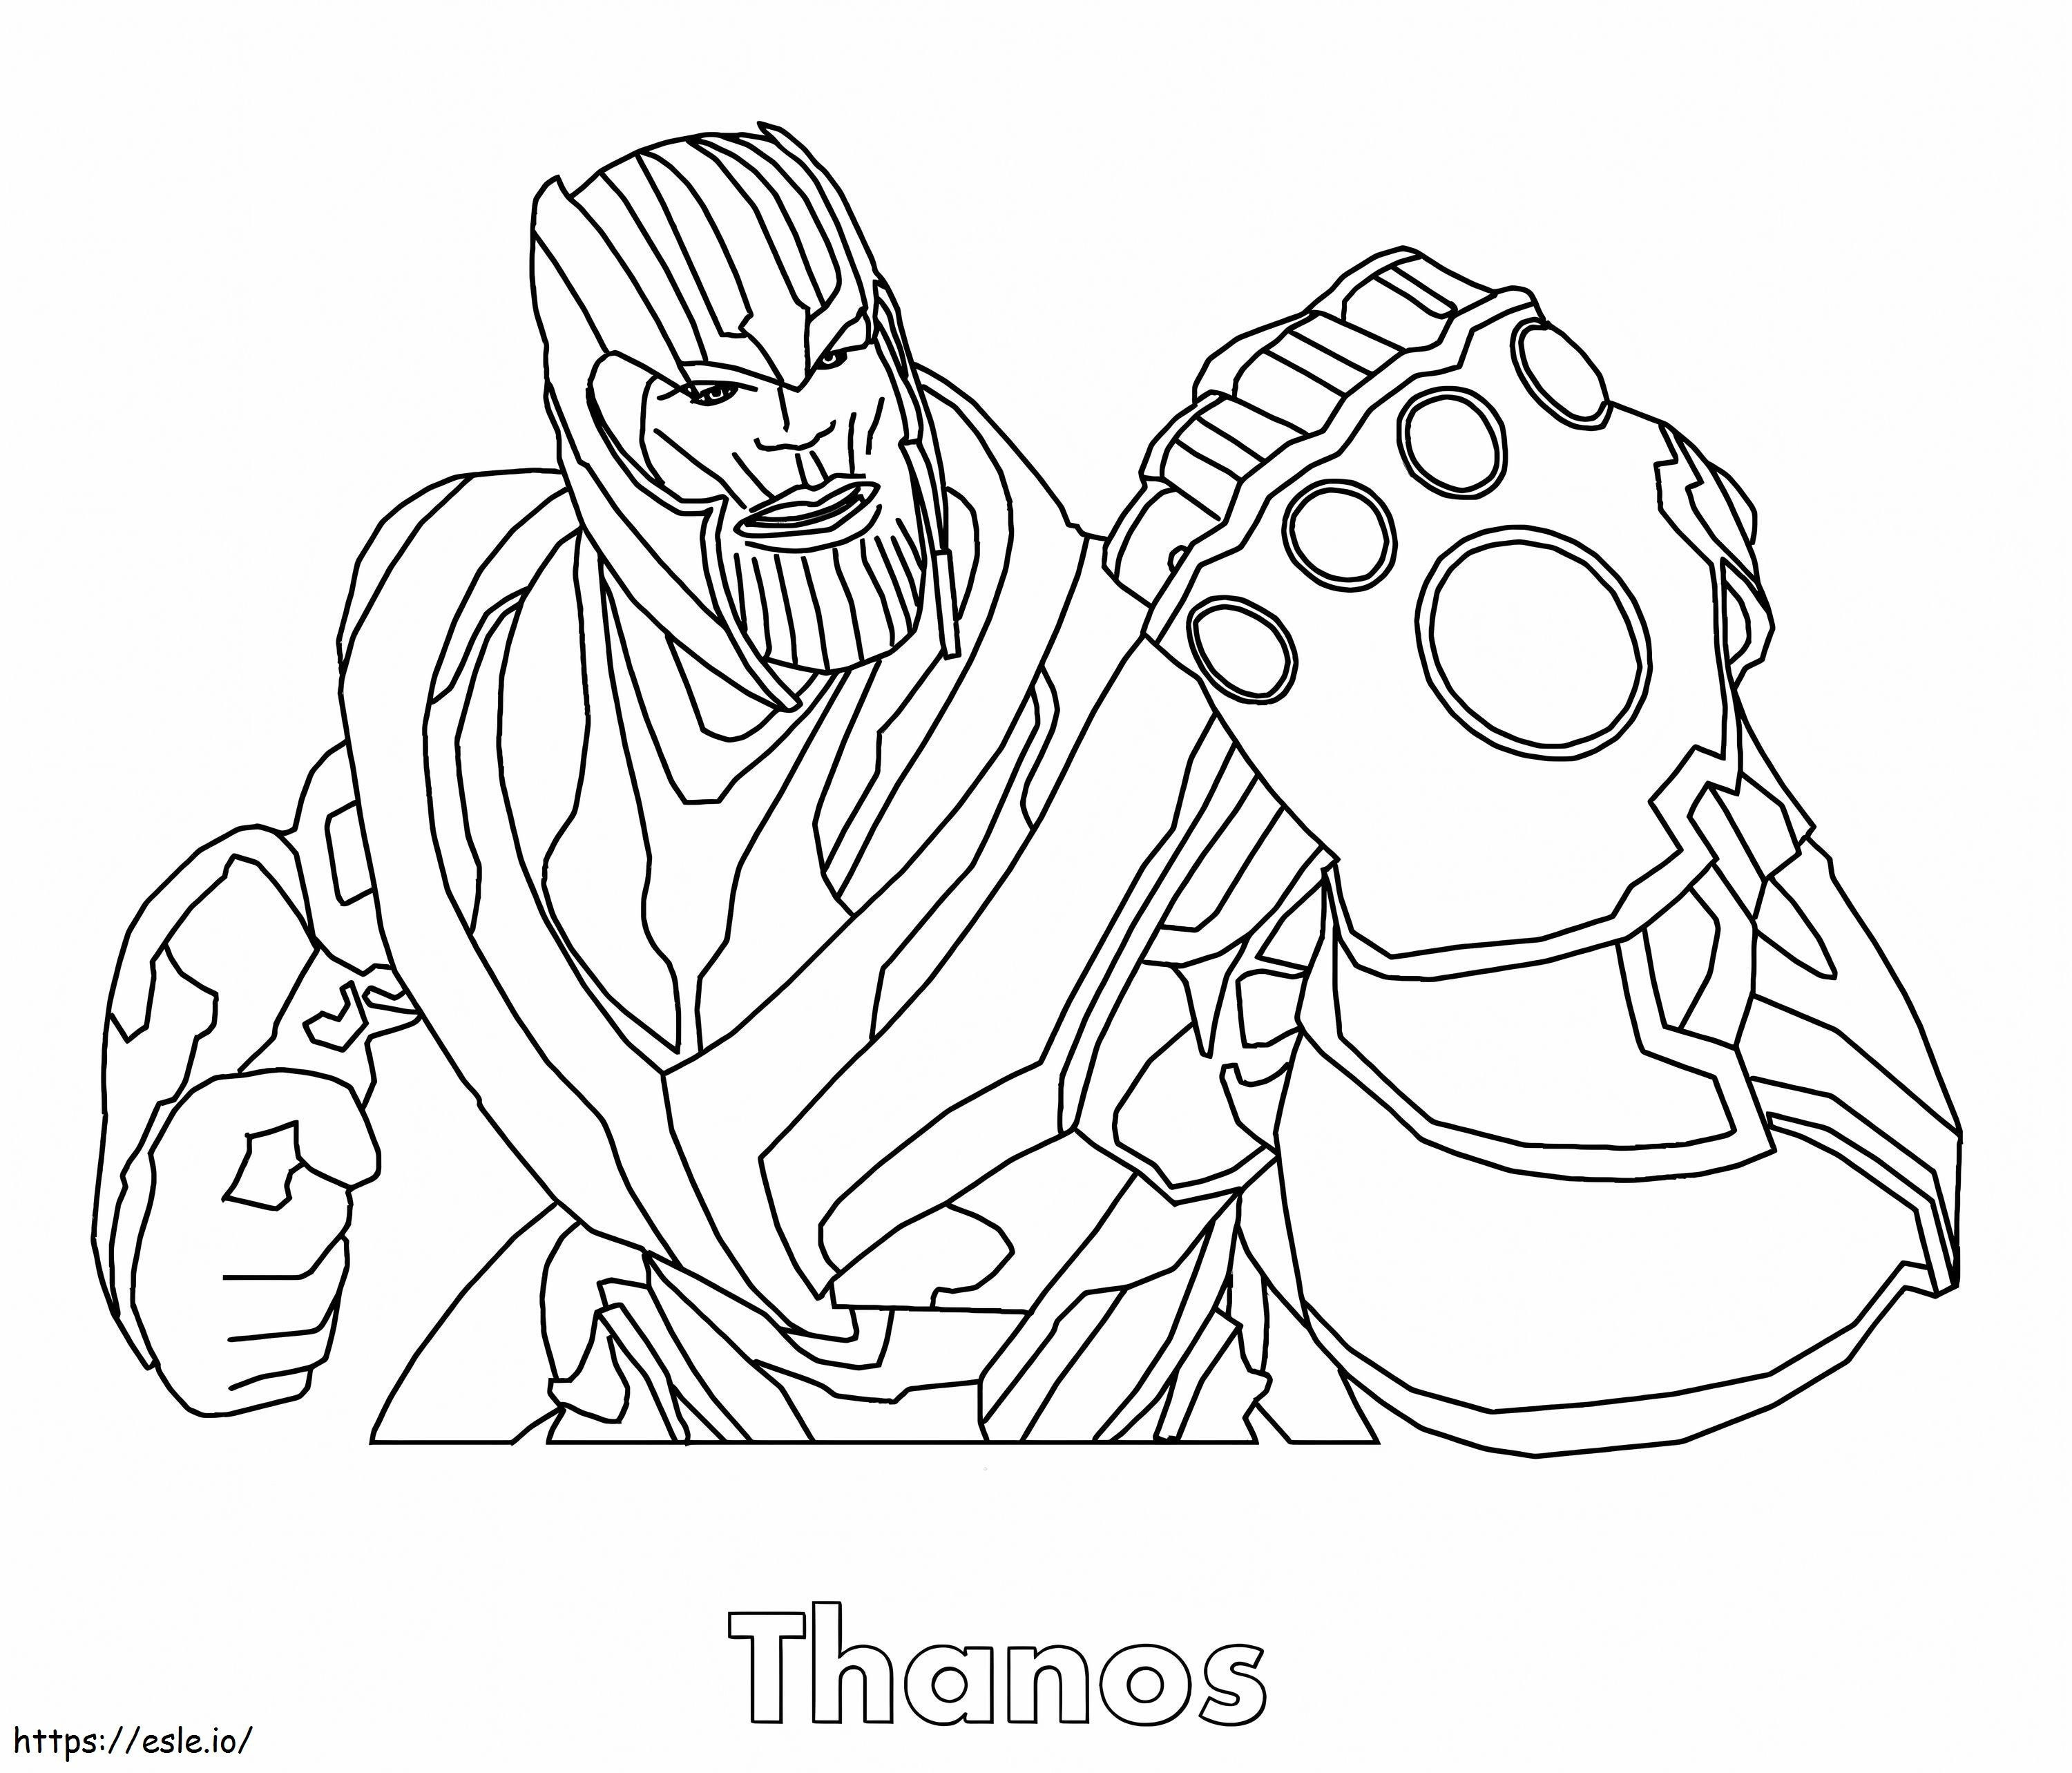 Thanos furios folosind Infinity Gauntlet de colorat